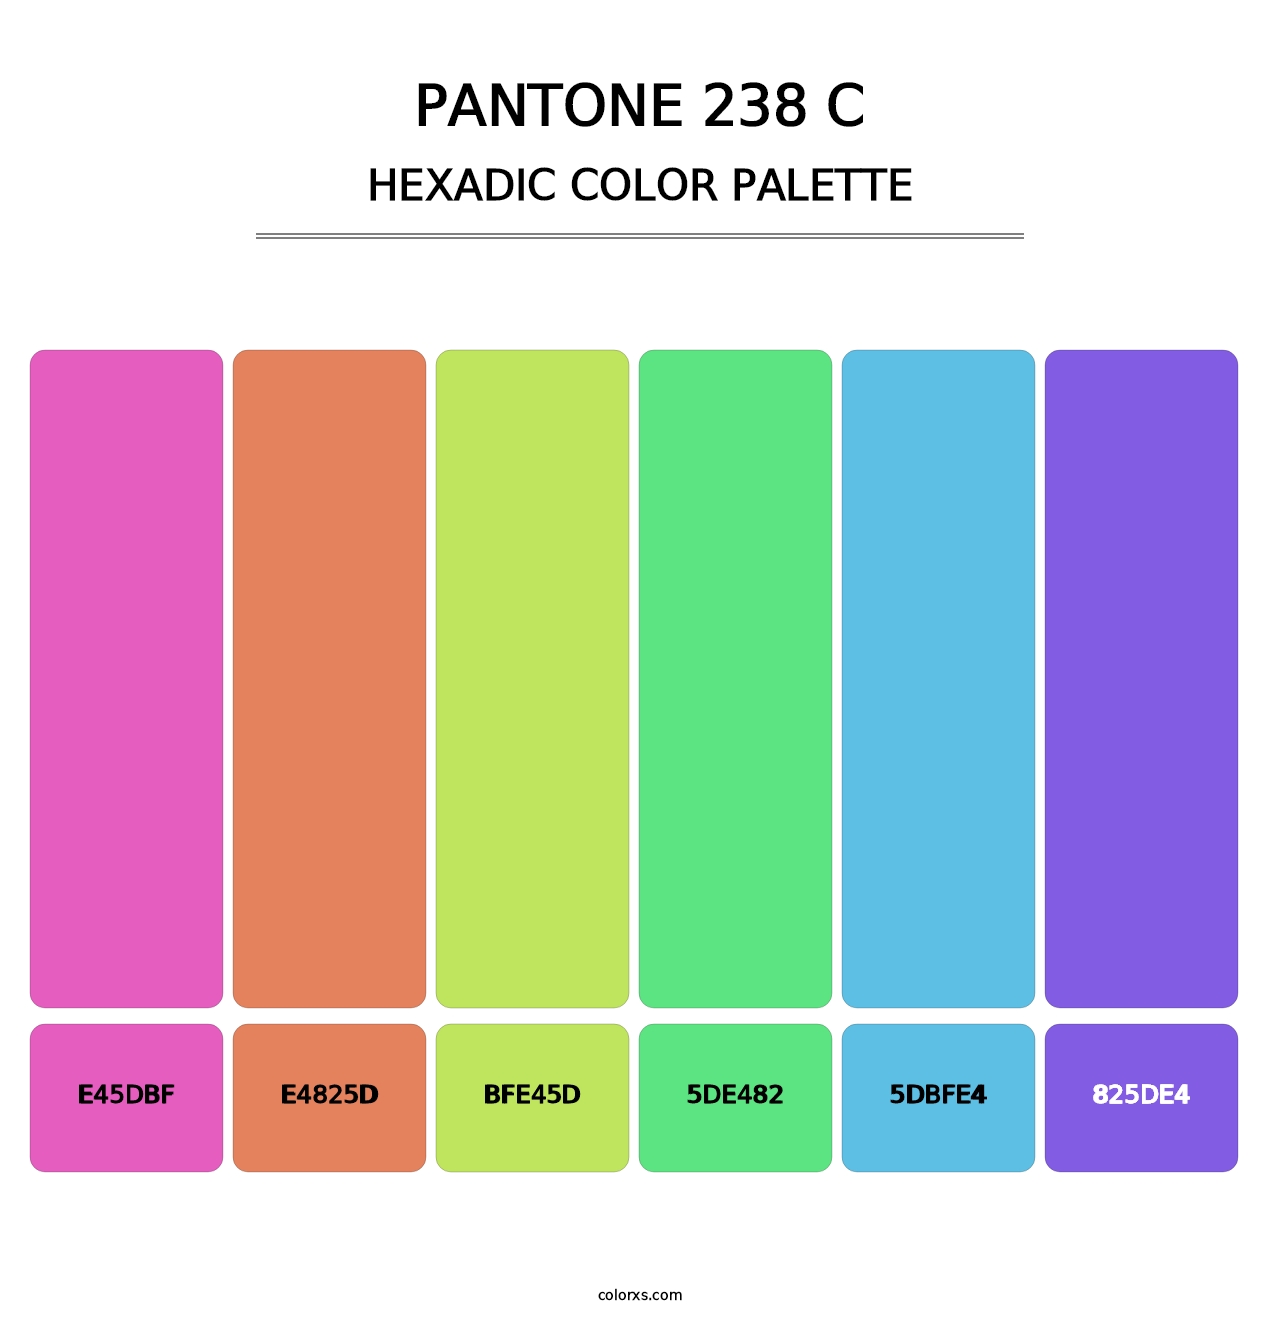 PANTONE 238 C - Hexadic Color Palette